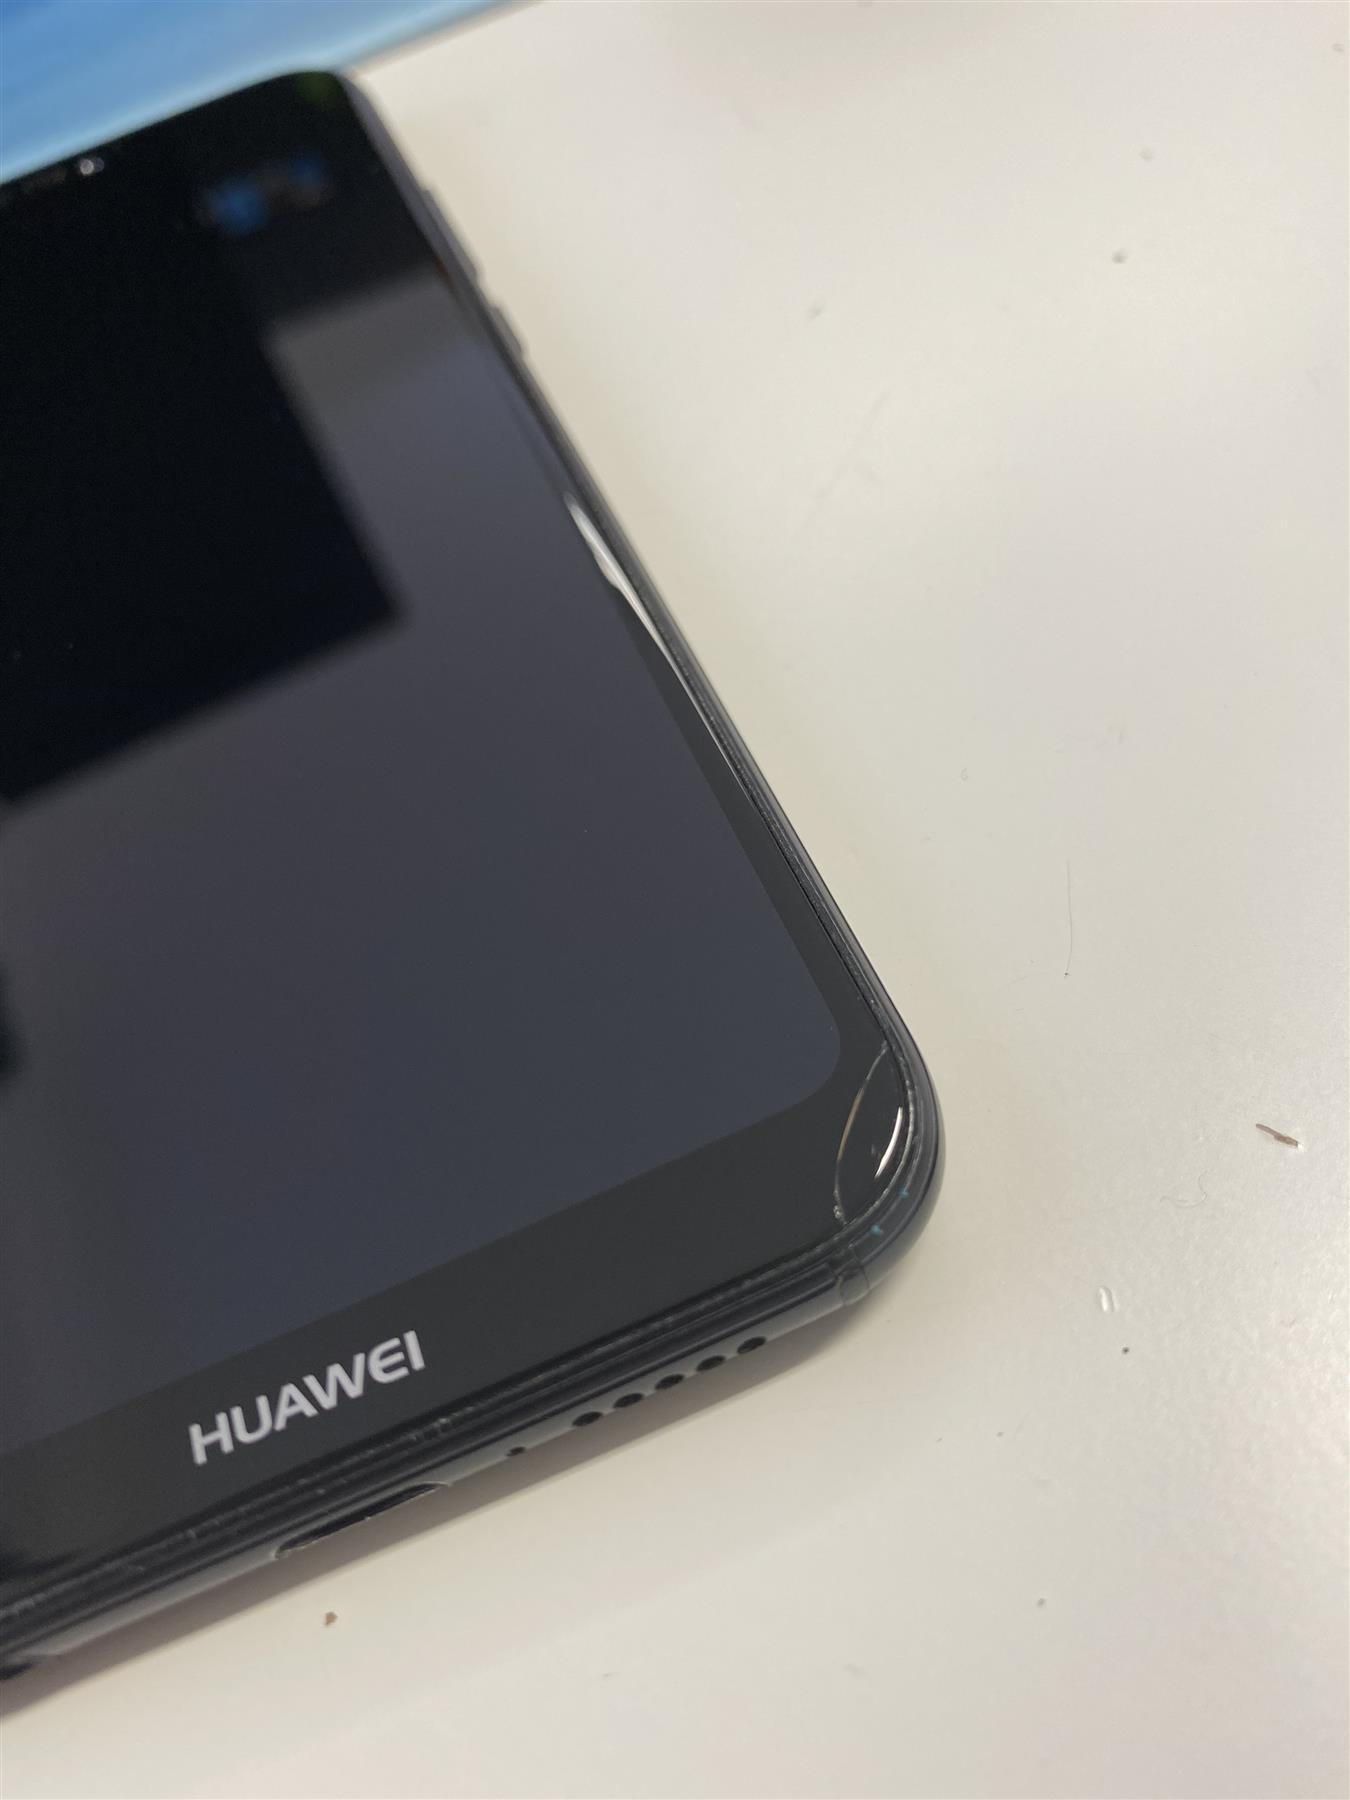 Huawei P20 Lite 64GB Black Unlocked Used